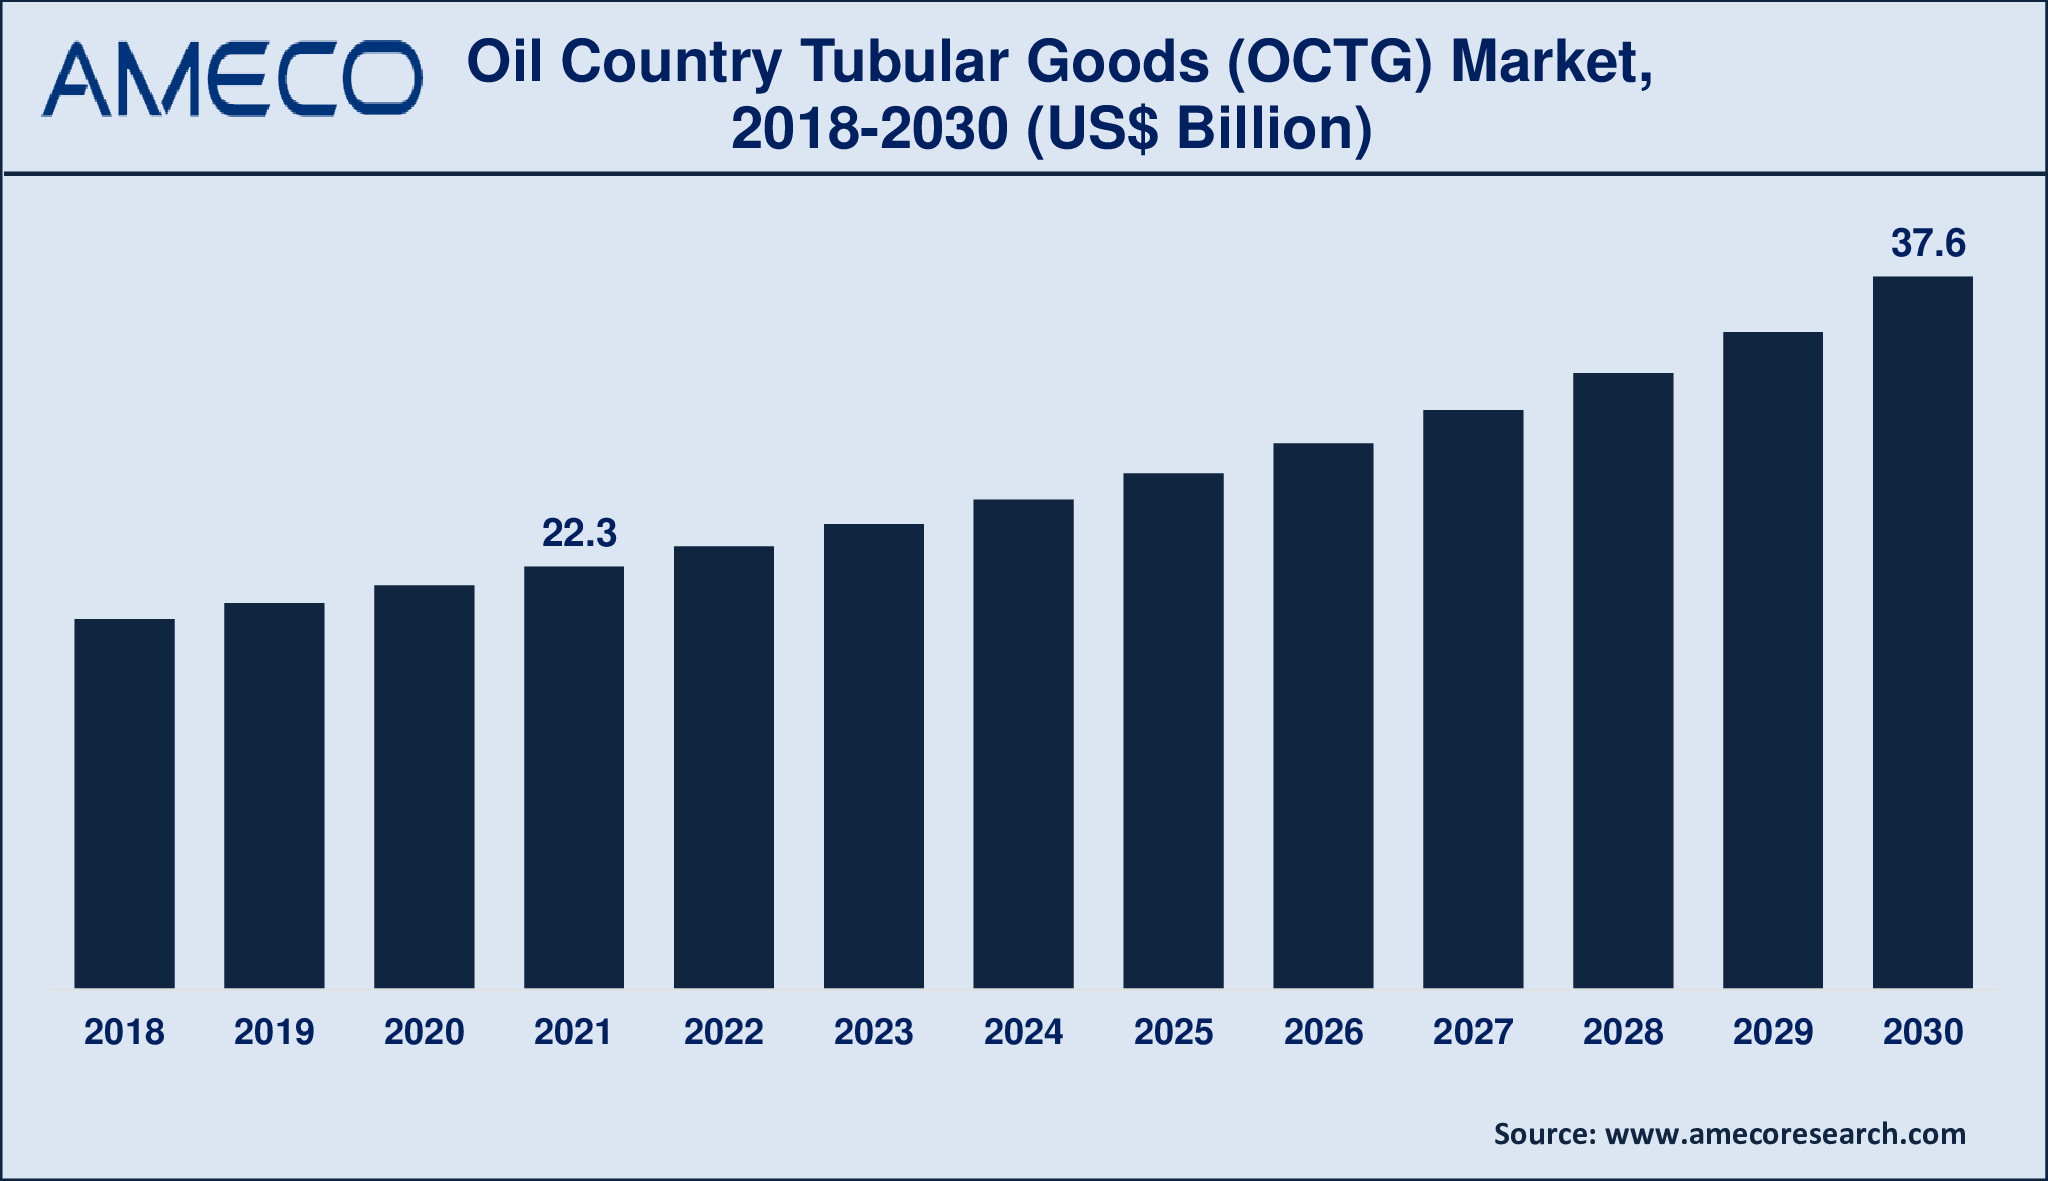 Oil Country Tubular Goods (OCTG) Market Dynamics